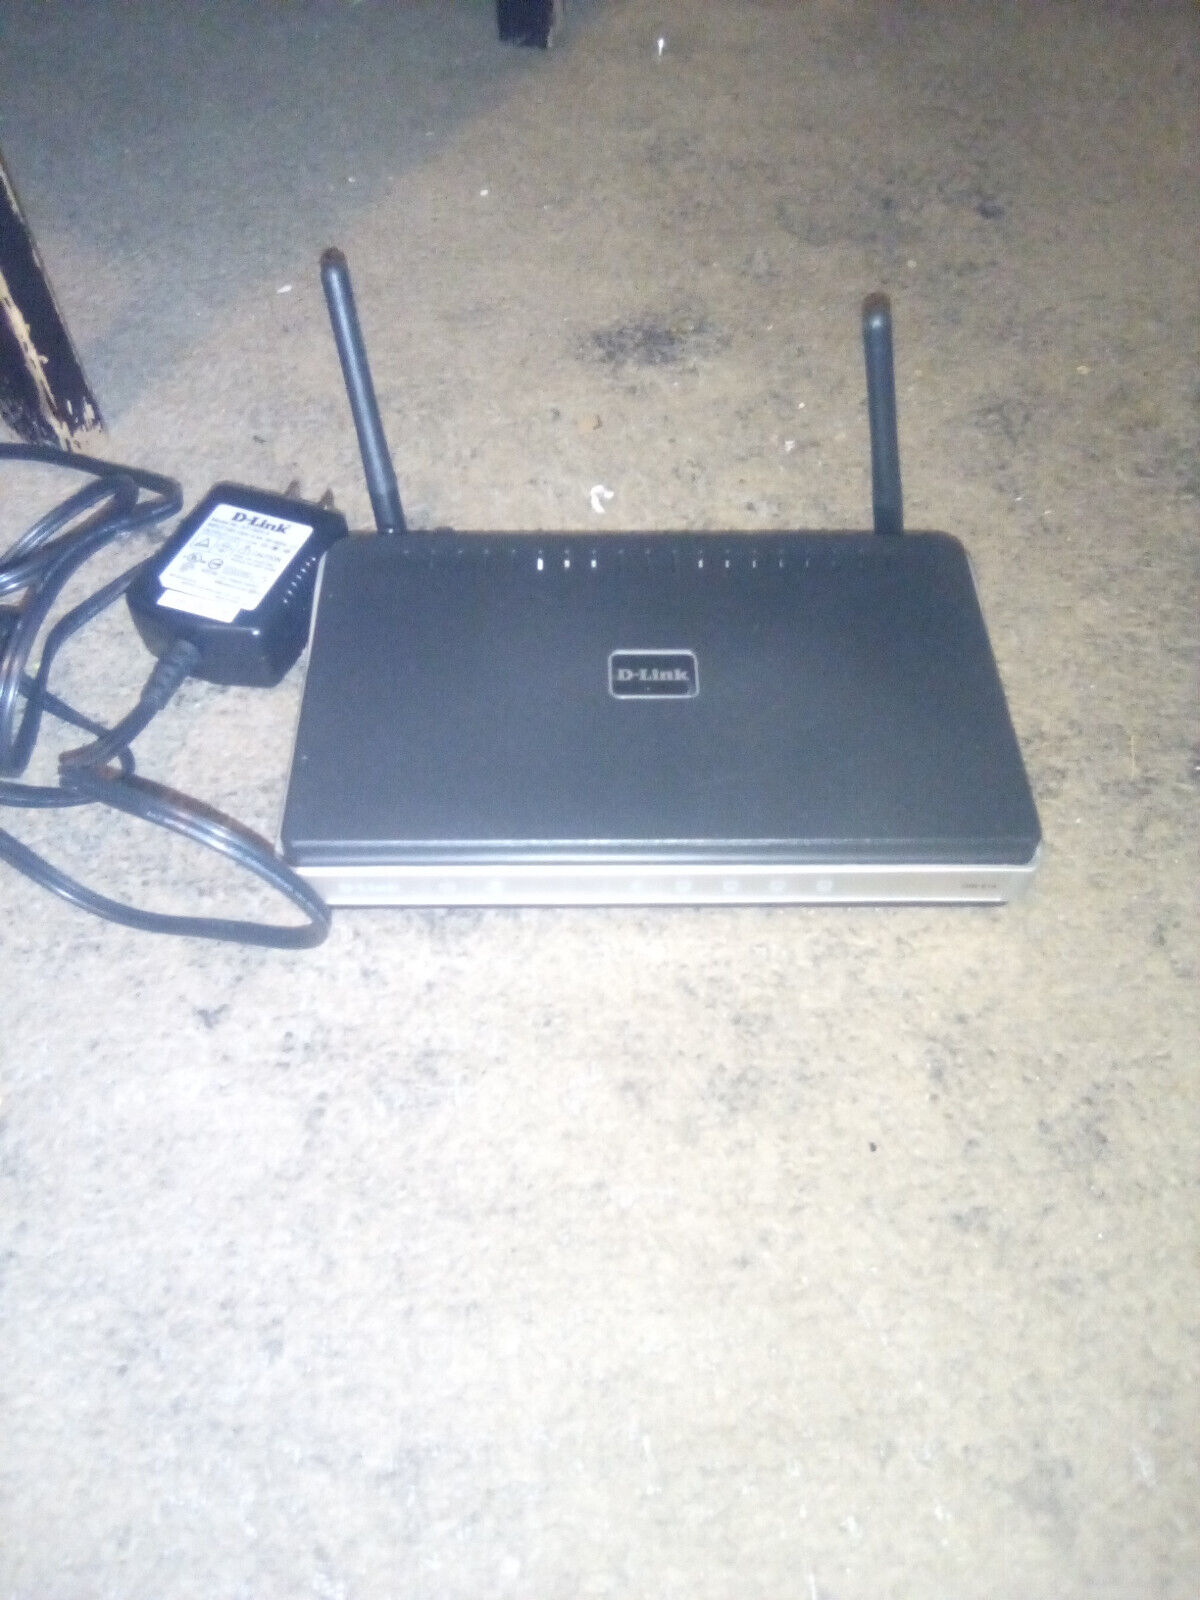 D-Link DIR-615 Wireless-N 300 Wifi Router 4 Port 10/100 Networking N300 unit -A-